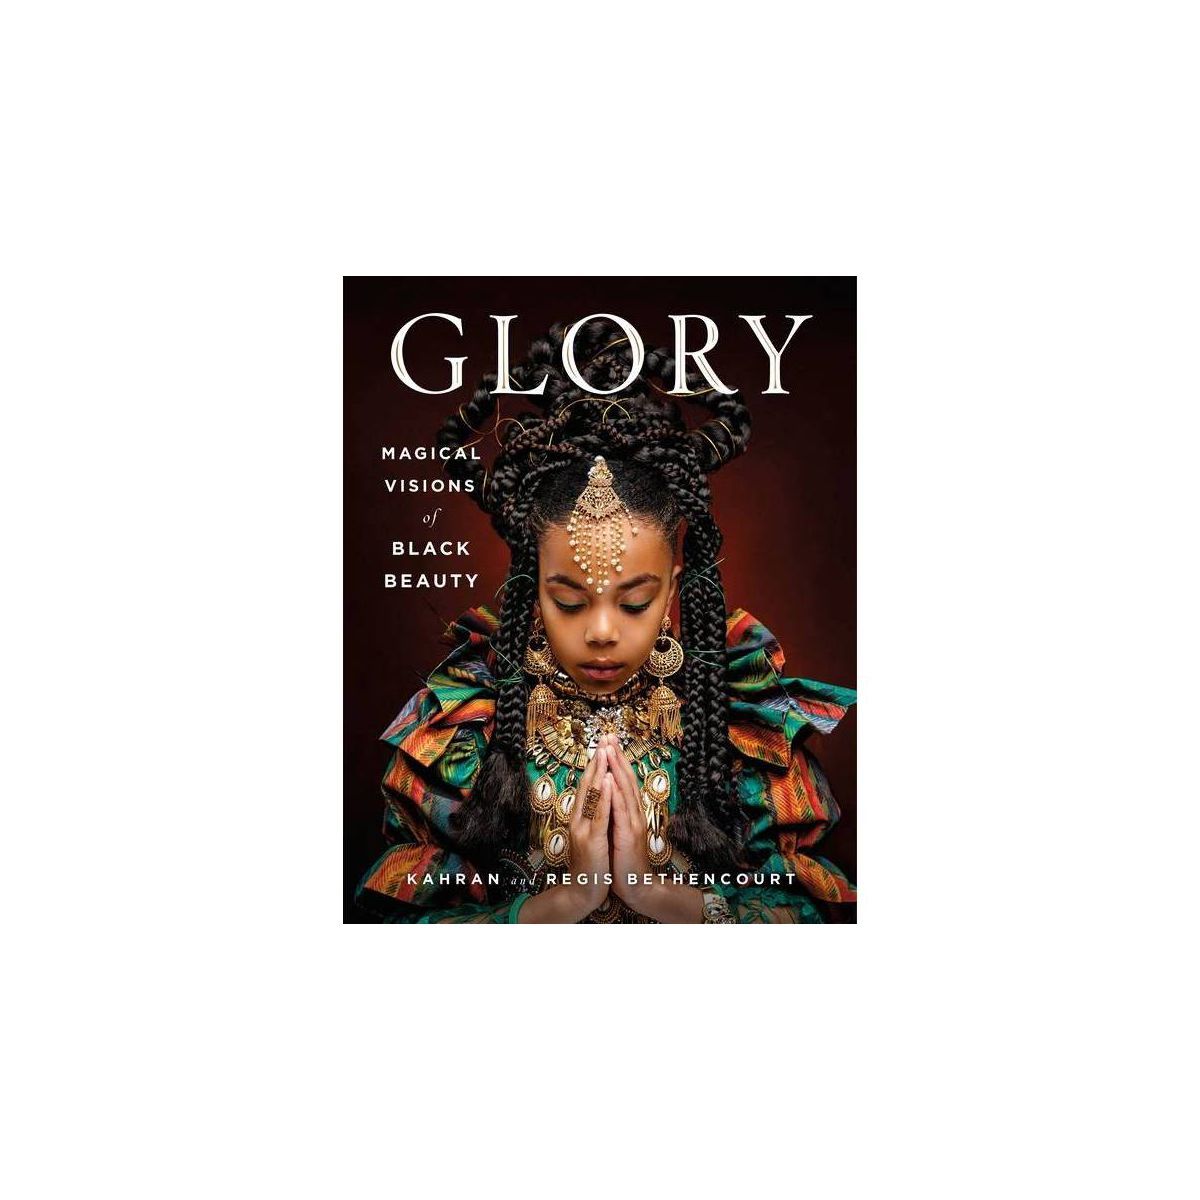 Glory - by Kahran Bethencourt & Regis Bethencourt (Hardcover) | Target